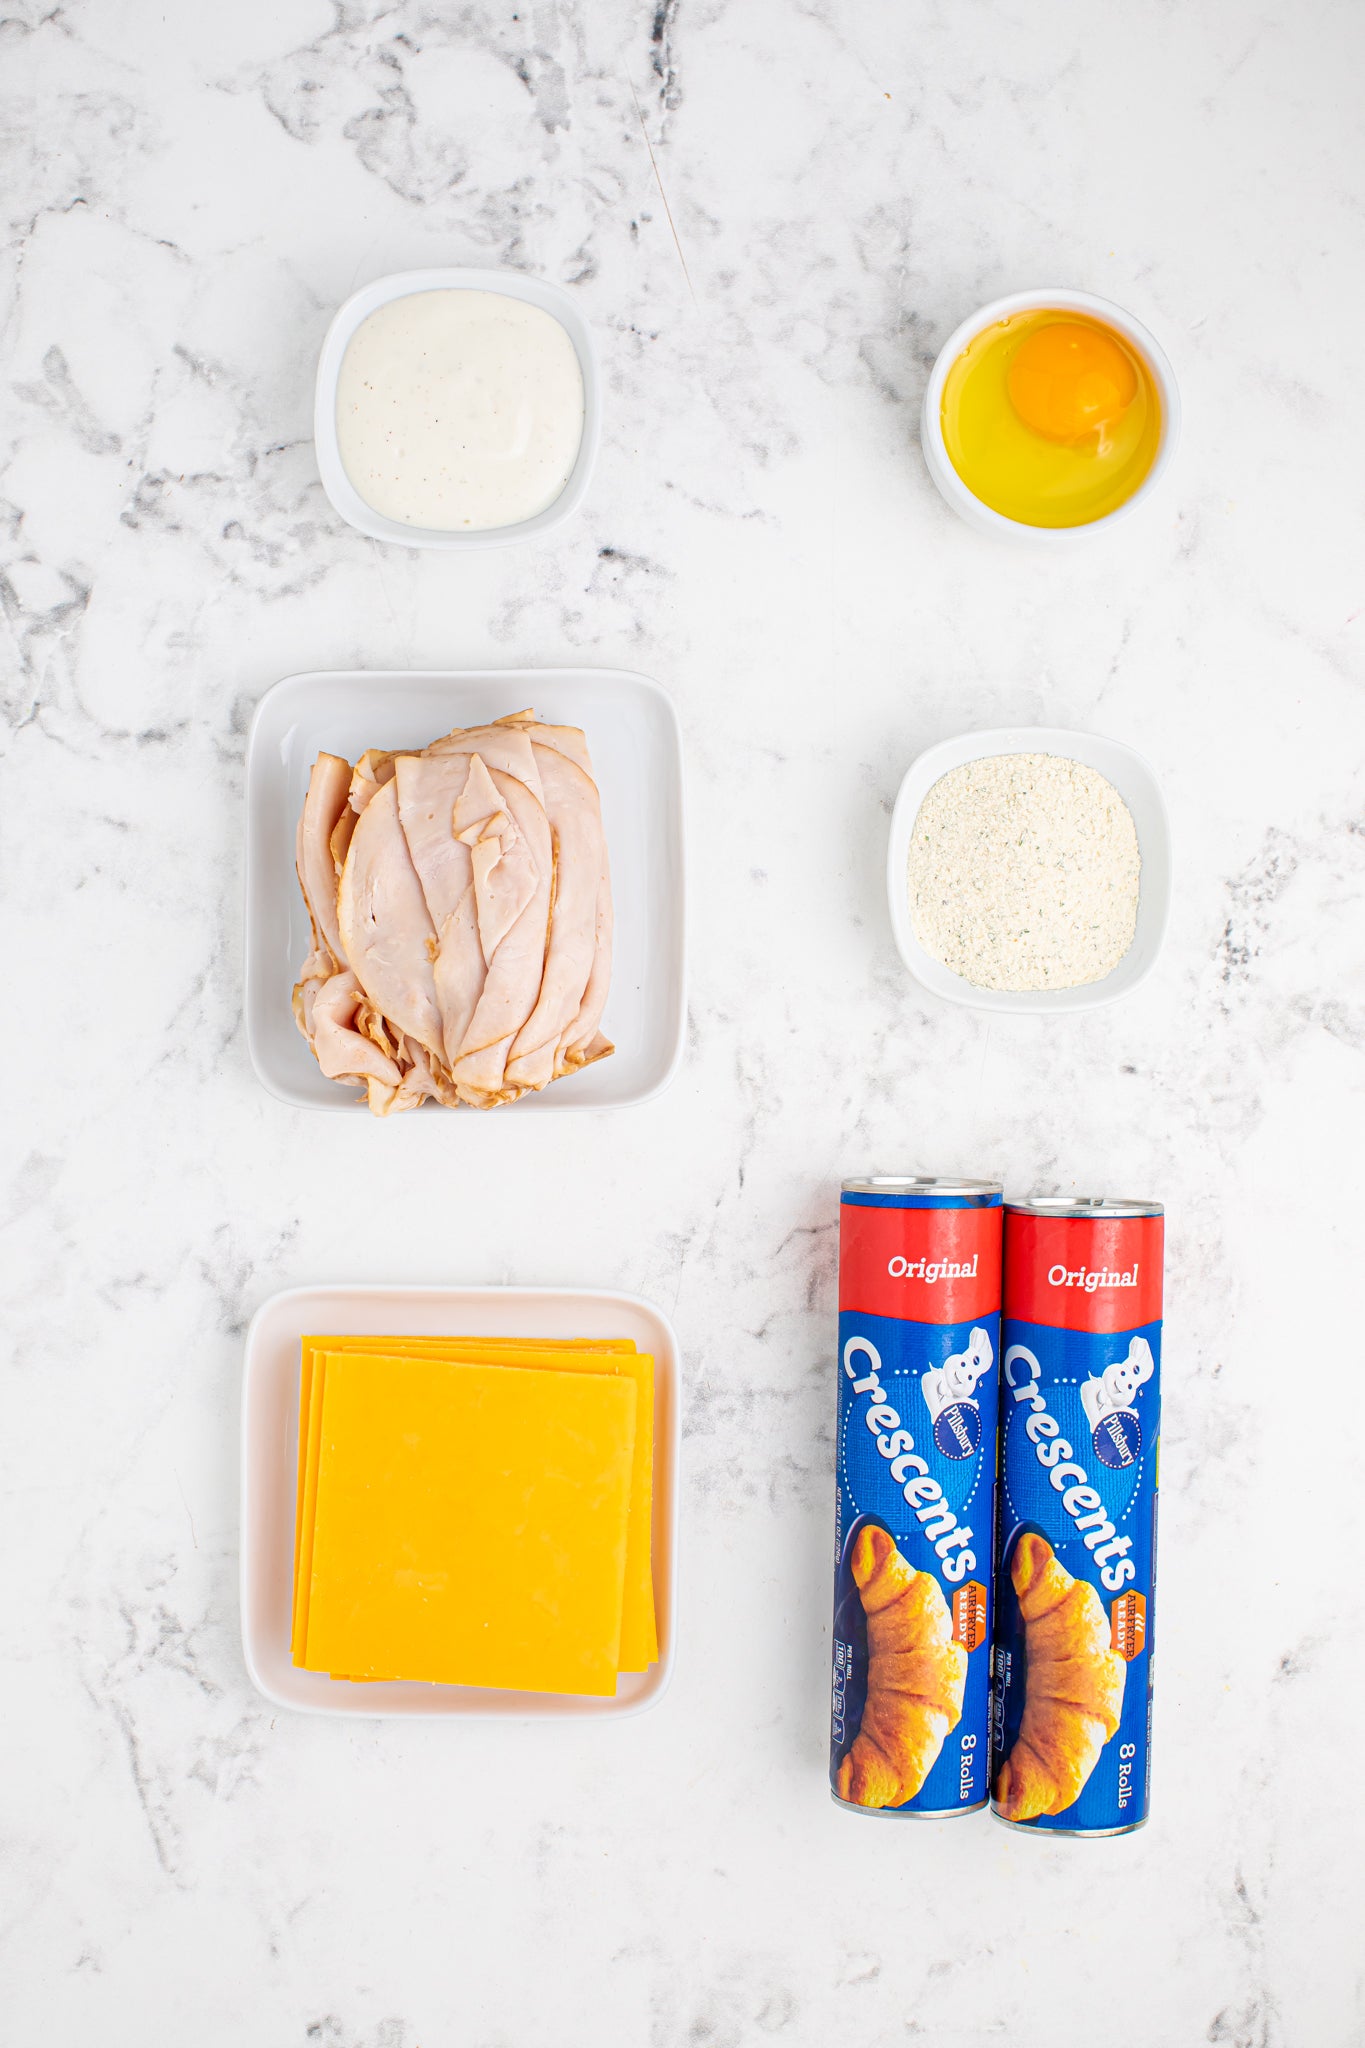 x SALE! Ranch Turkey Cheddar Baked Sandwiches Set 2 - Semi-Exclusive Recipe